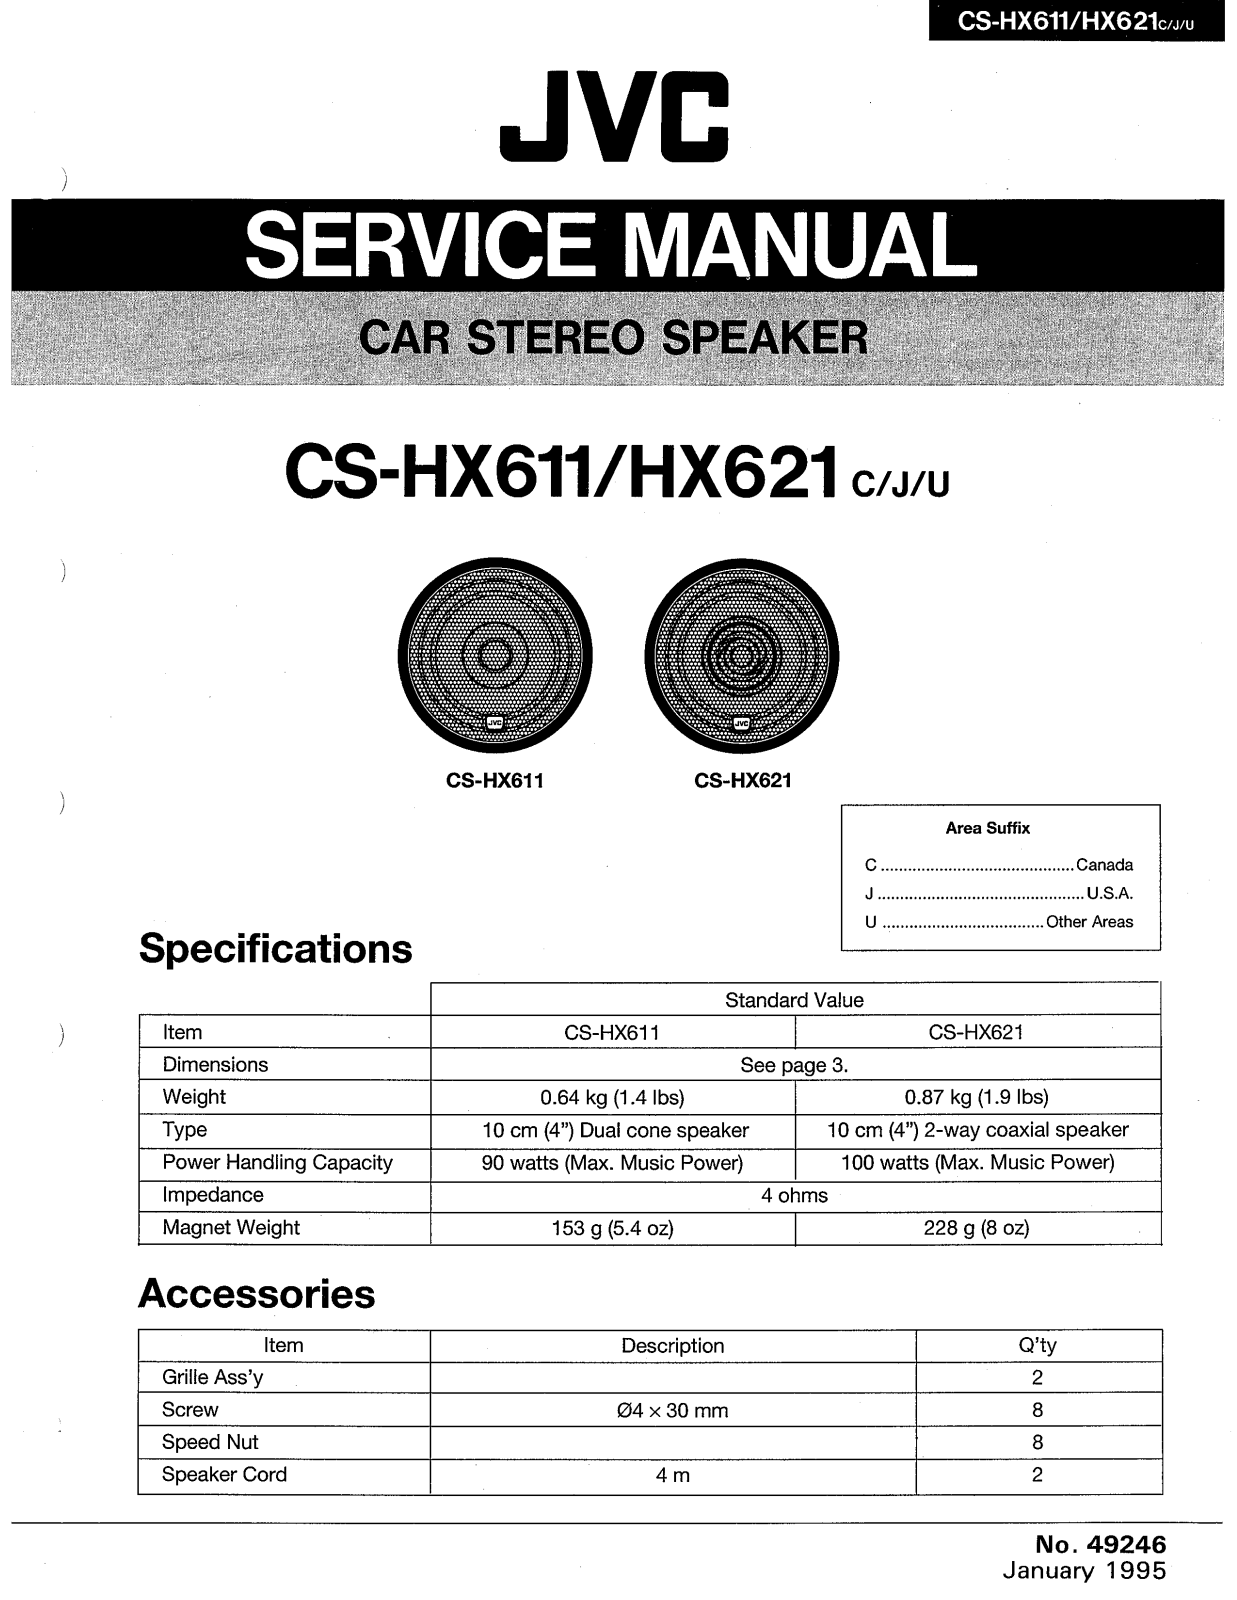 JVC CS-HX611C, CS-HX611J, CS-HX611U, CS-HX621C, CS-HX621J Service Manual